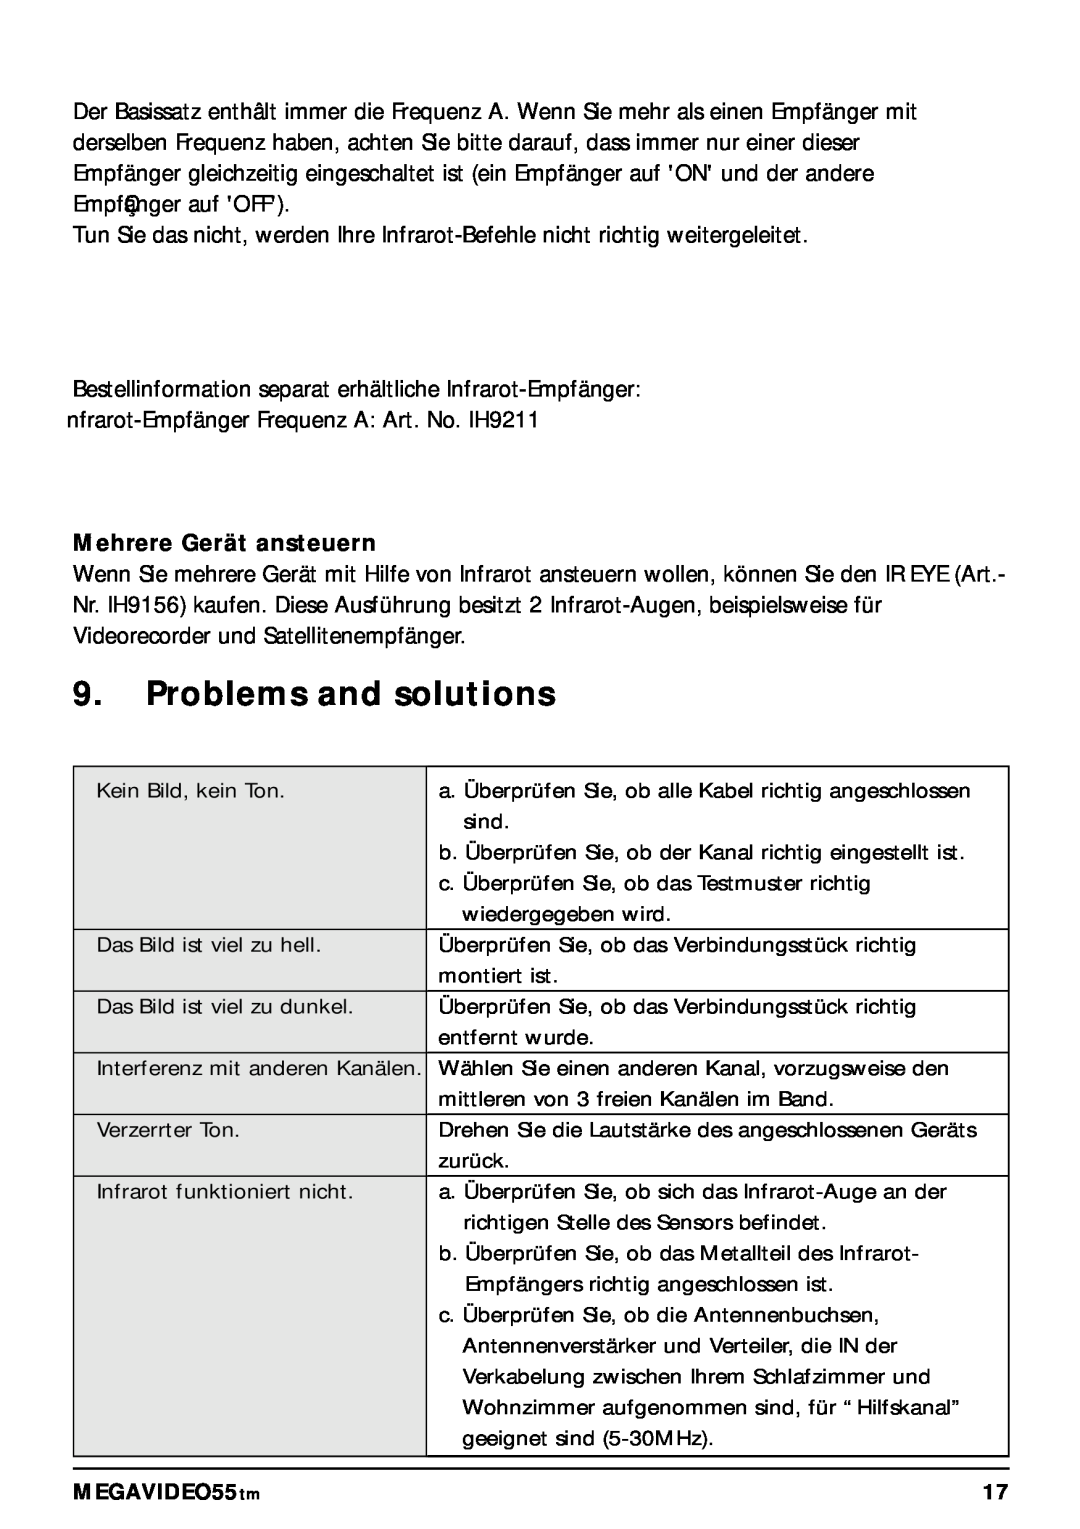 Marmitek 20068 / 300704 operating instructions Problems and solutions, Mehrere Gerät ansteuern 